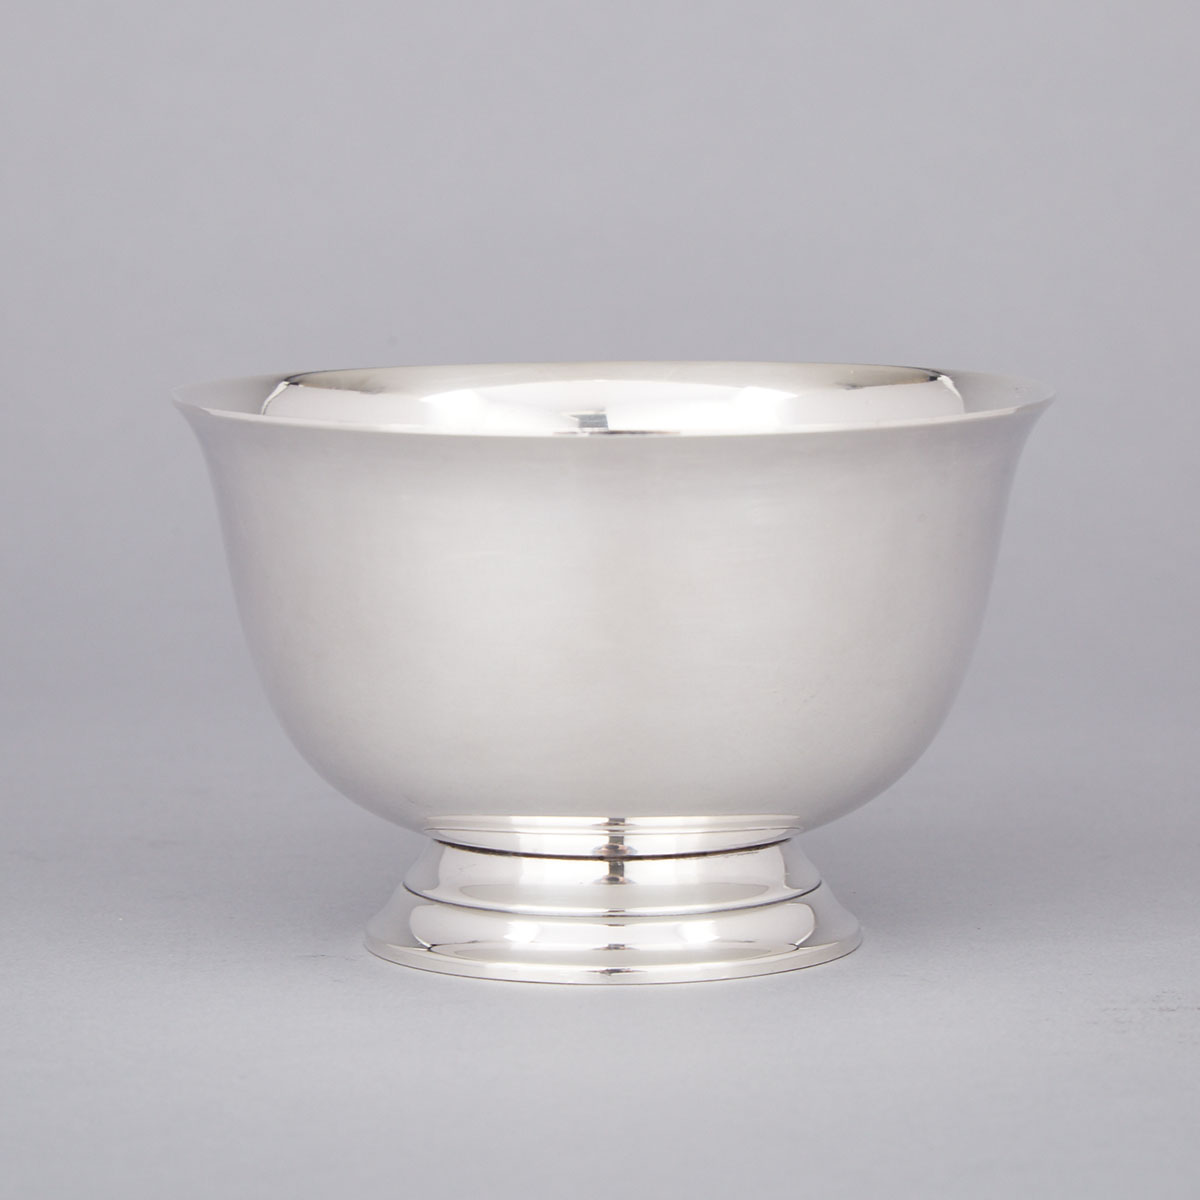 American Silver Small Footed Bowl, Tiffany & Co., New York, N.Y., 20th century